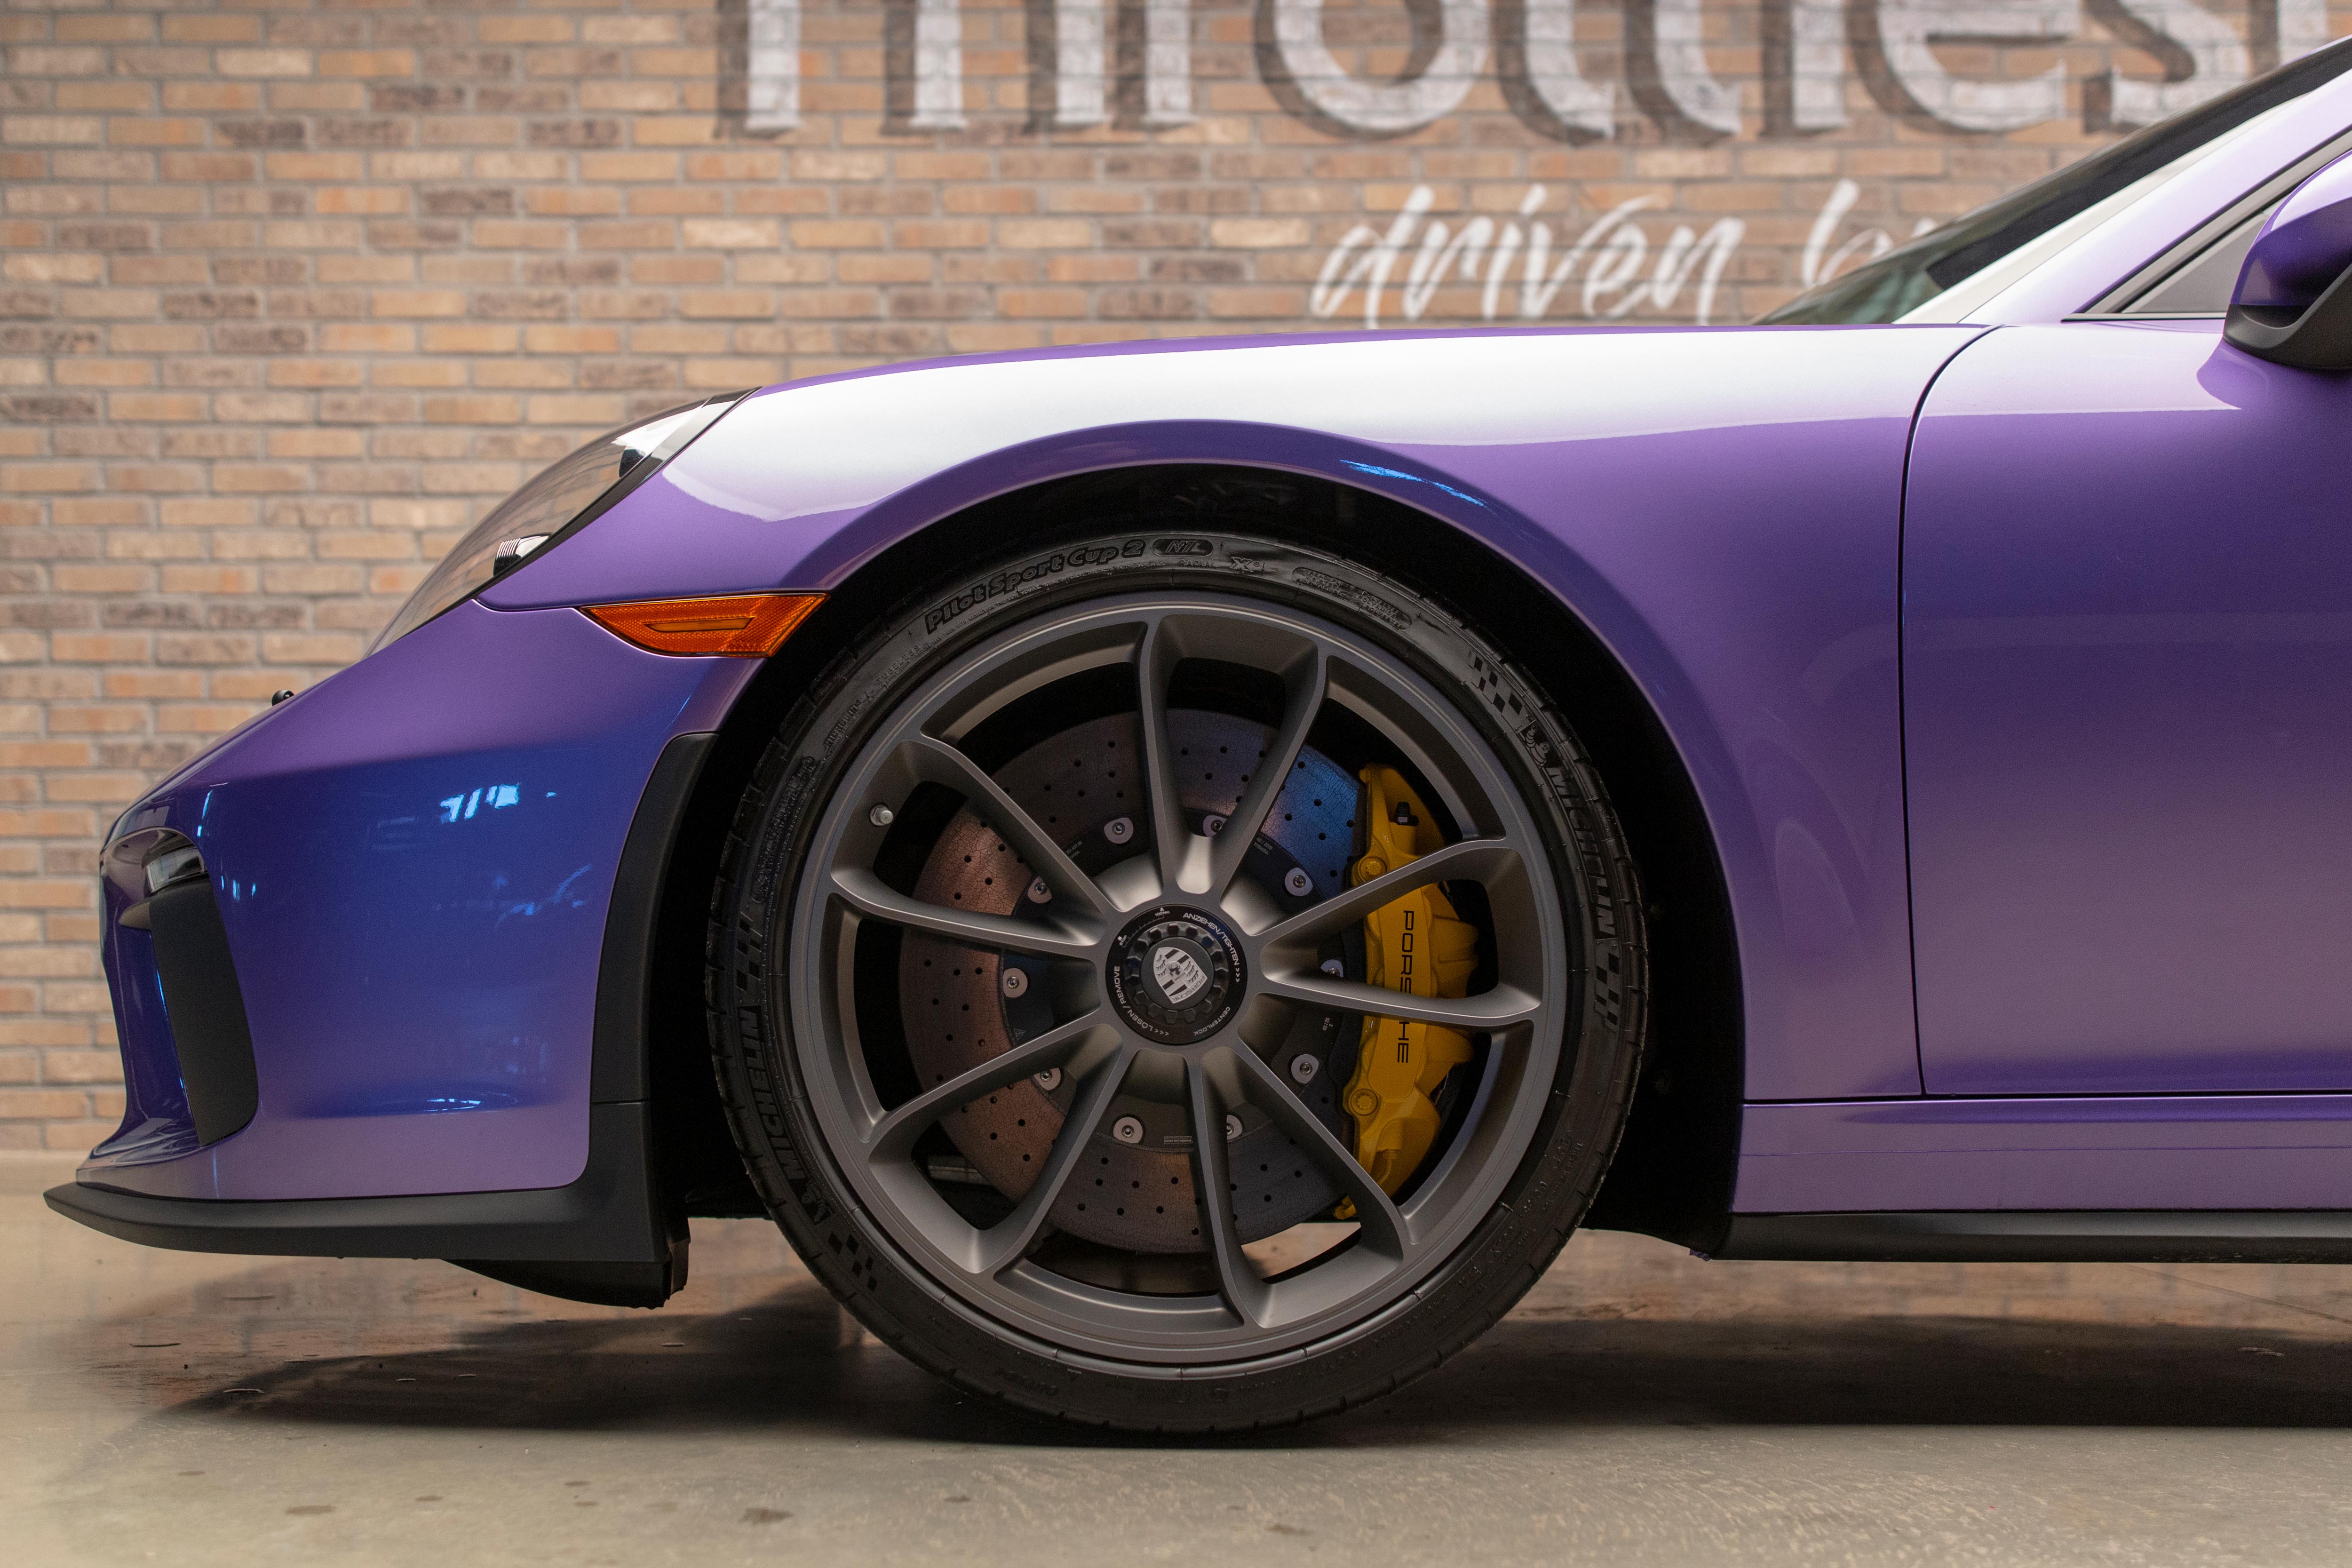 General 5000x3333 Porsche Porsche 911 wheels car sports car purple cars